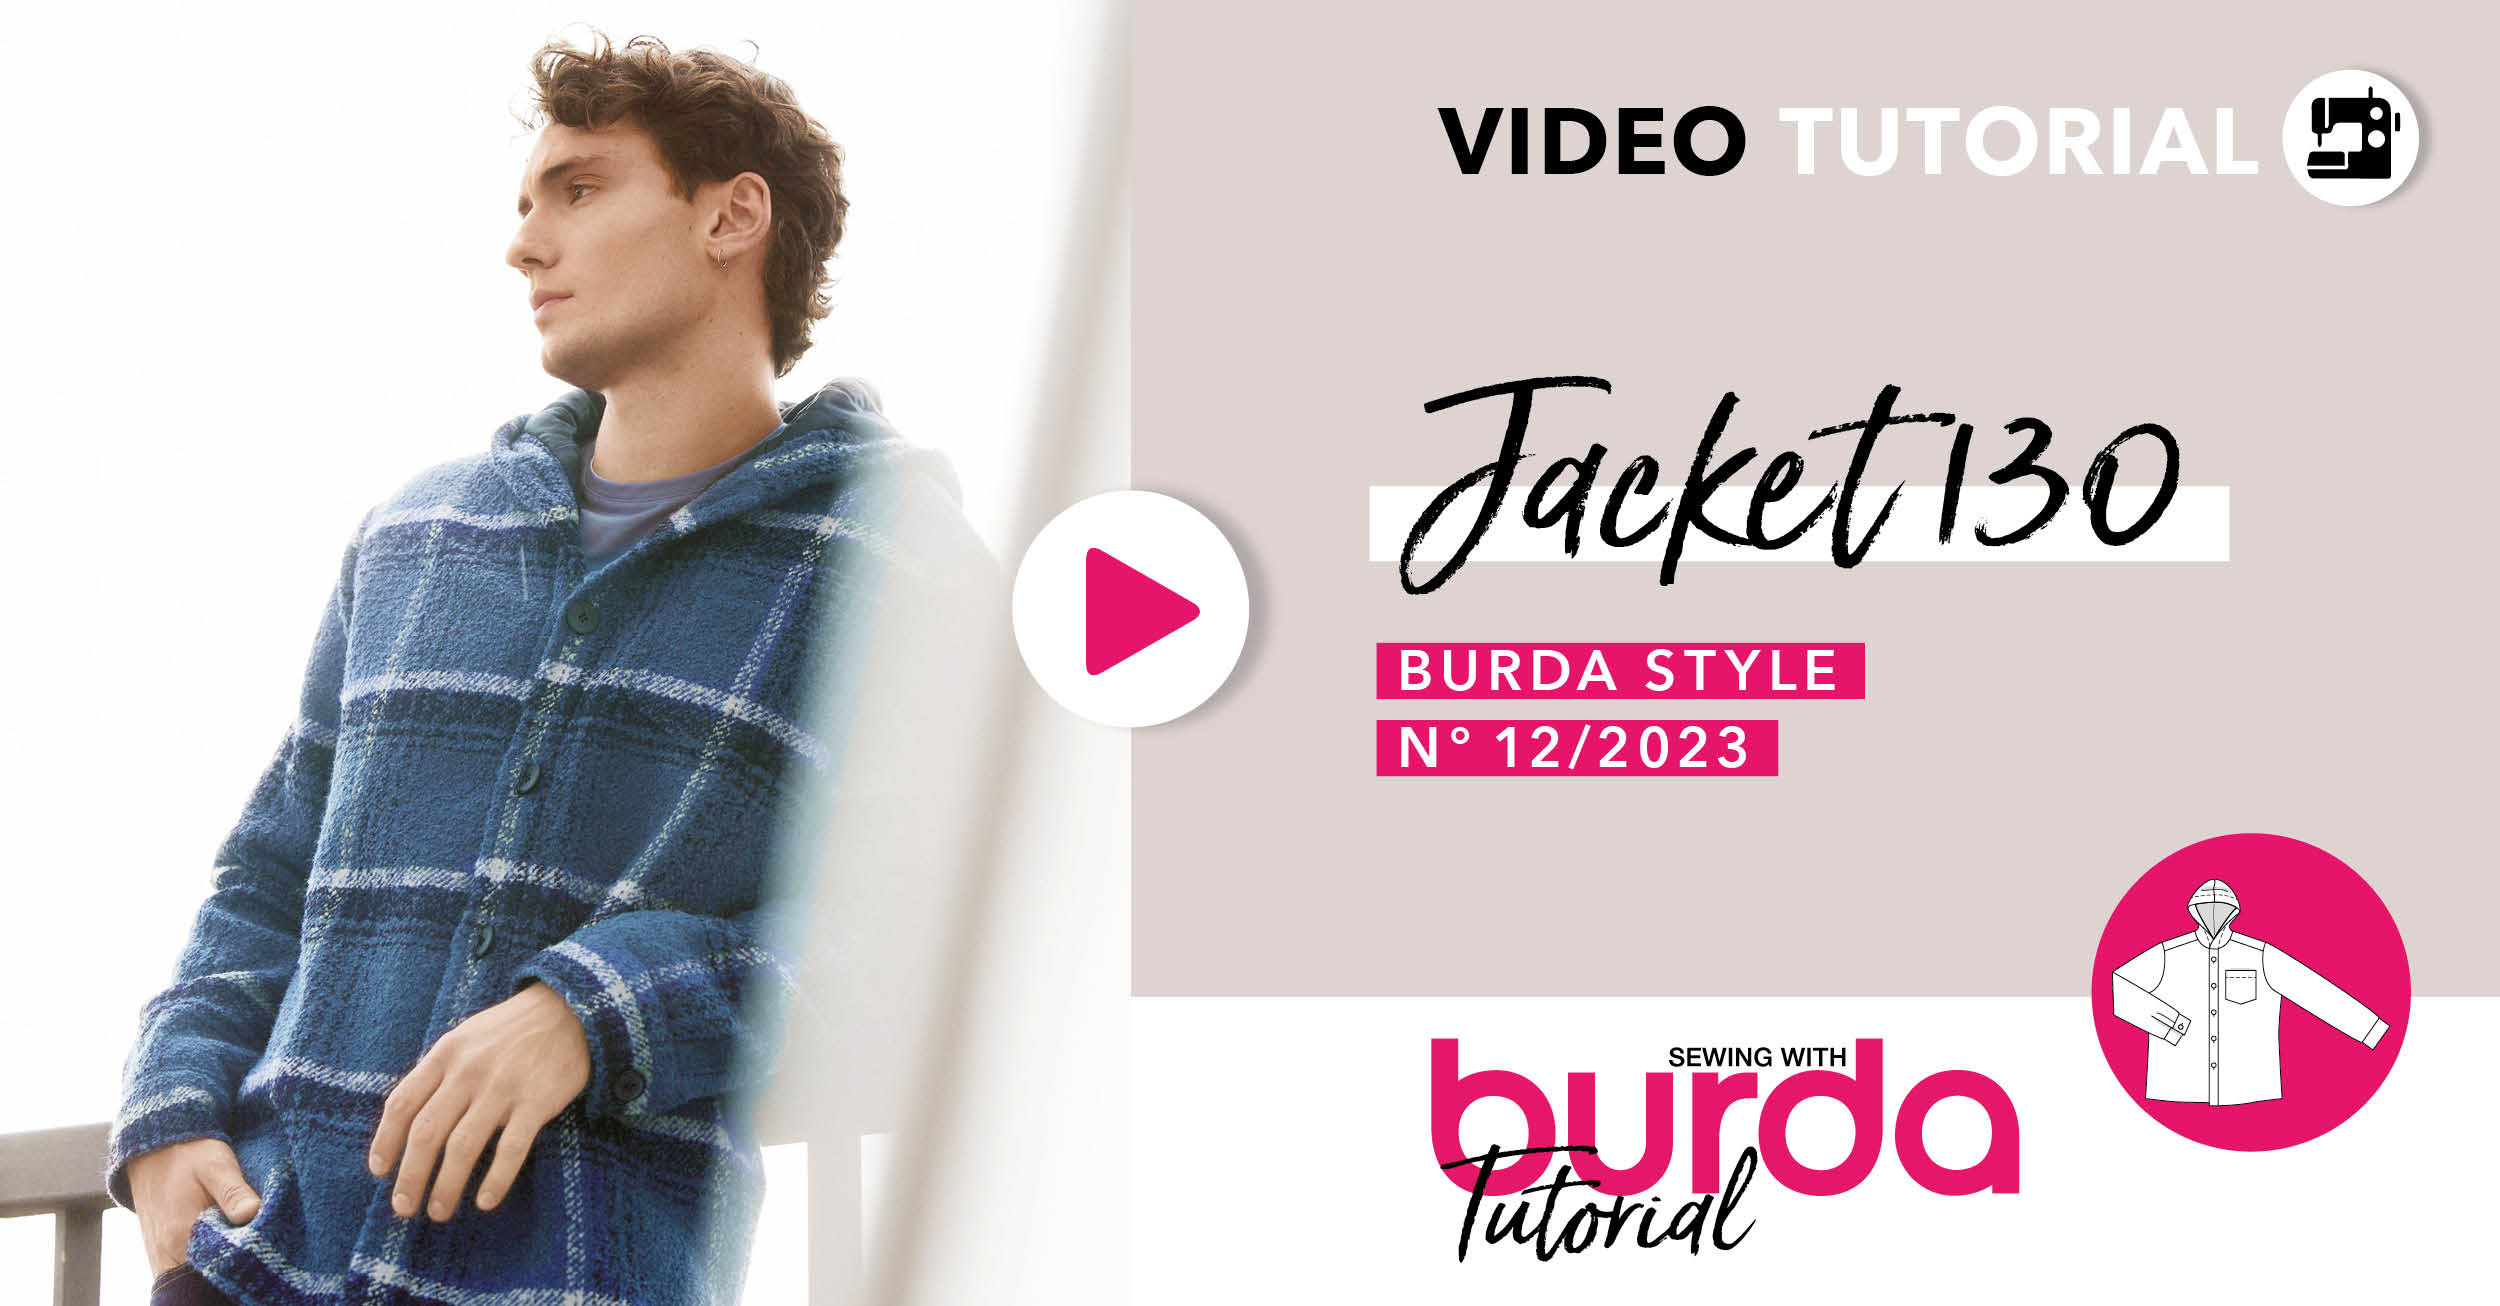 Video Tutorial: Jacket 130 - Burda Style December 2023